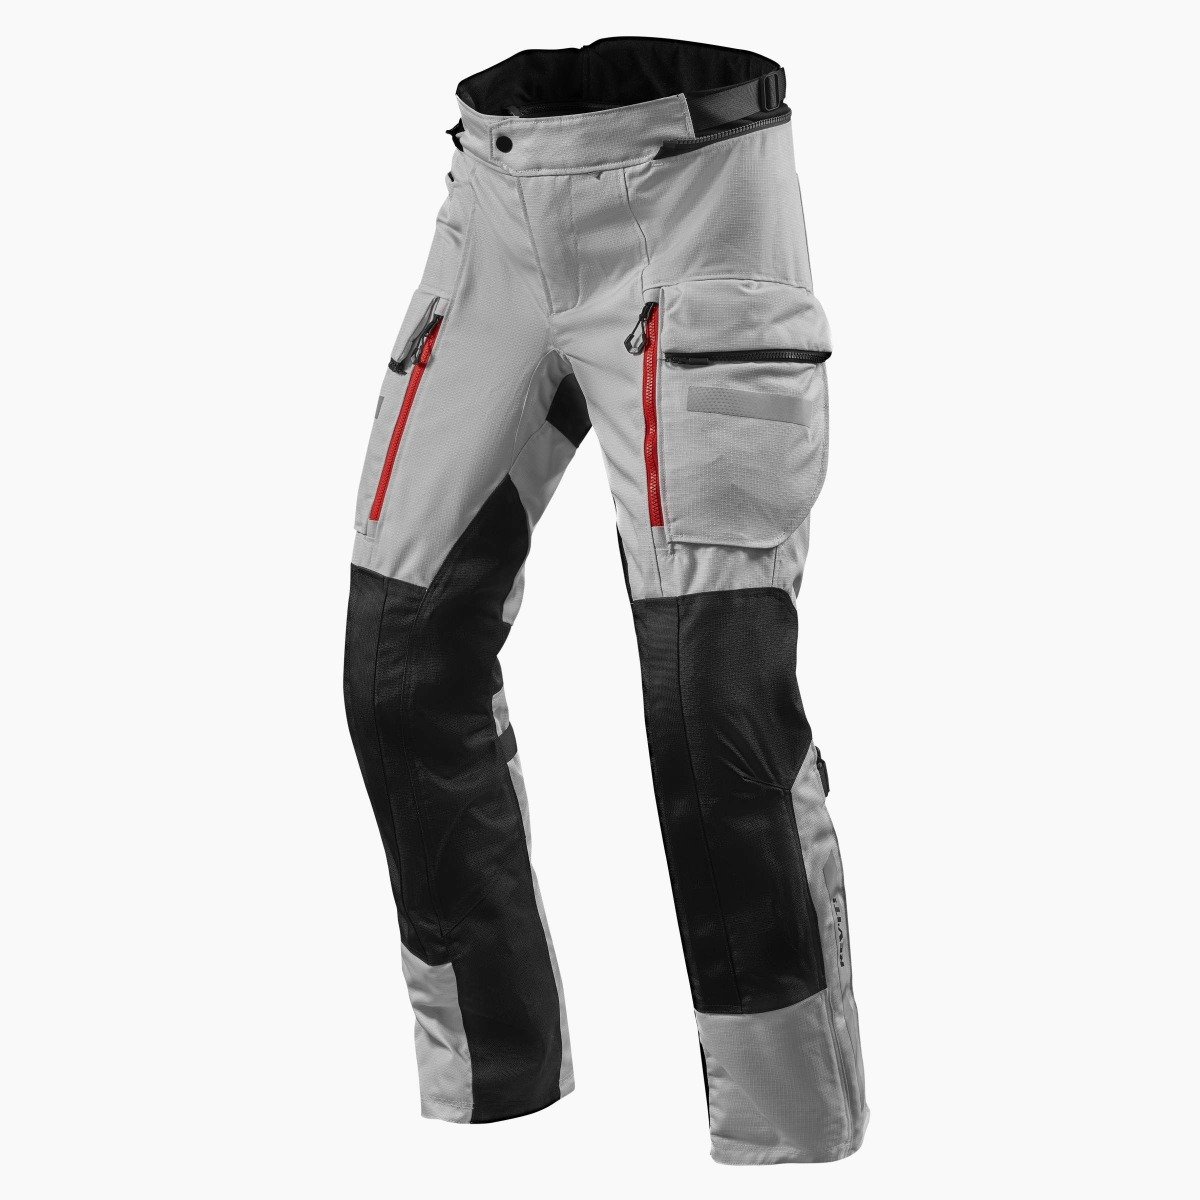 Image of REV'IT! Sand 4 H2O Standard Silver Black Motorcycle Pants Talla 2XL